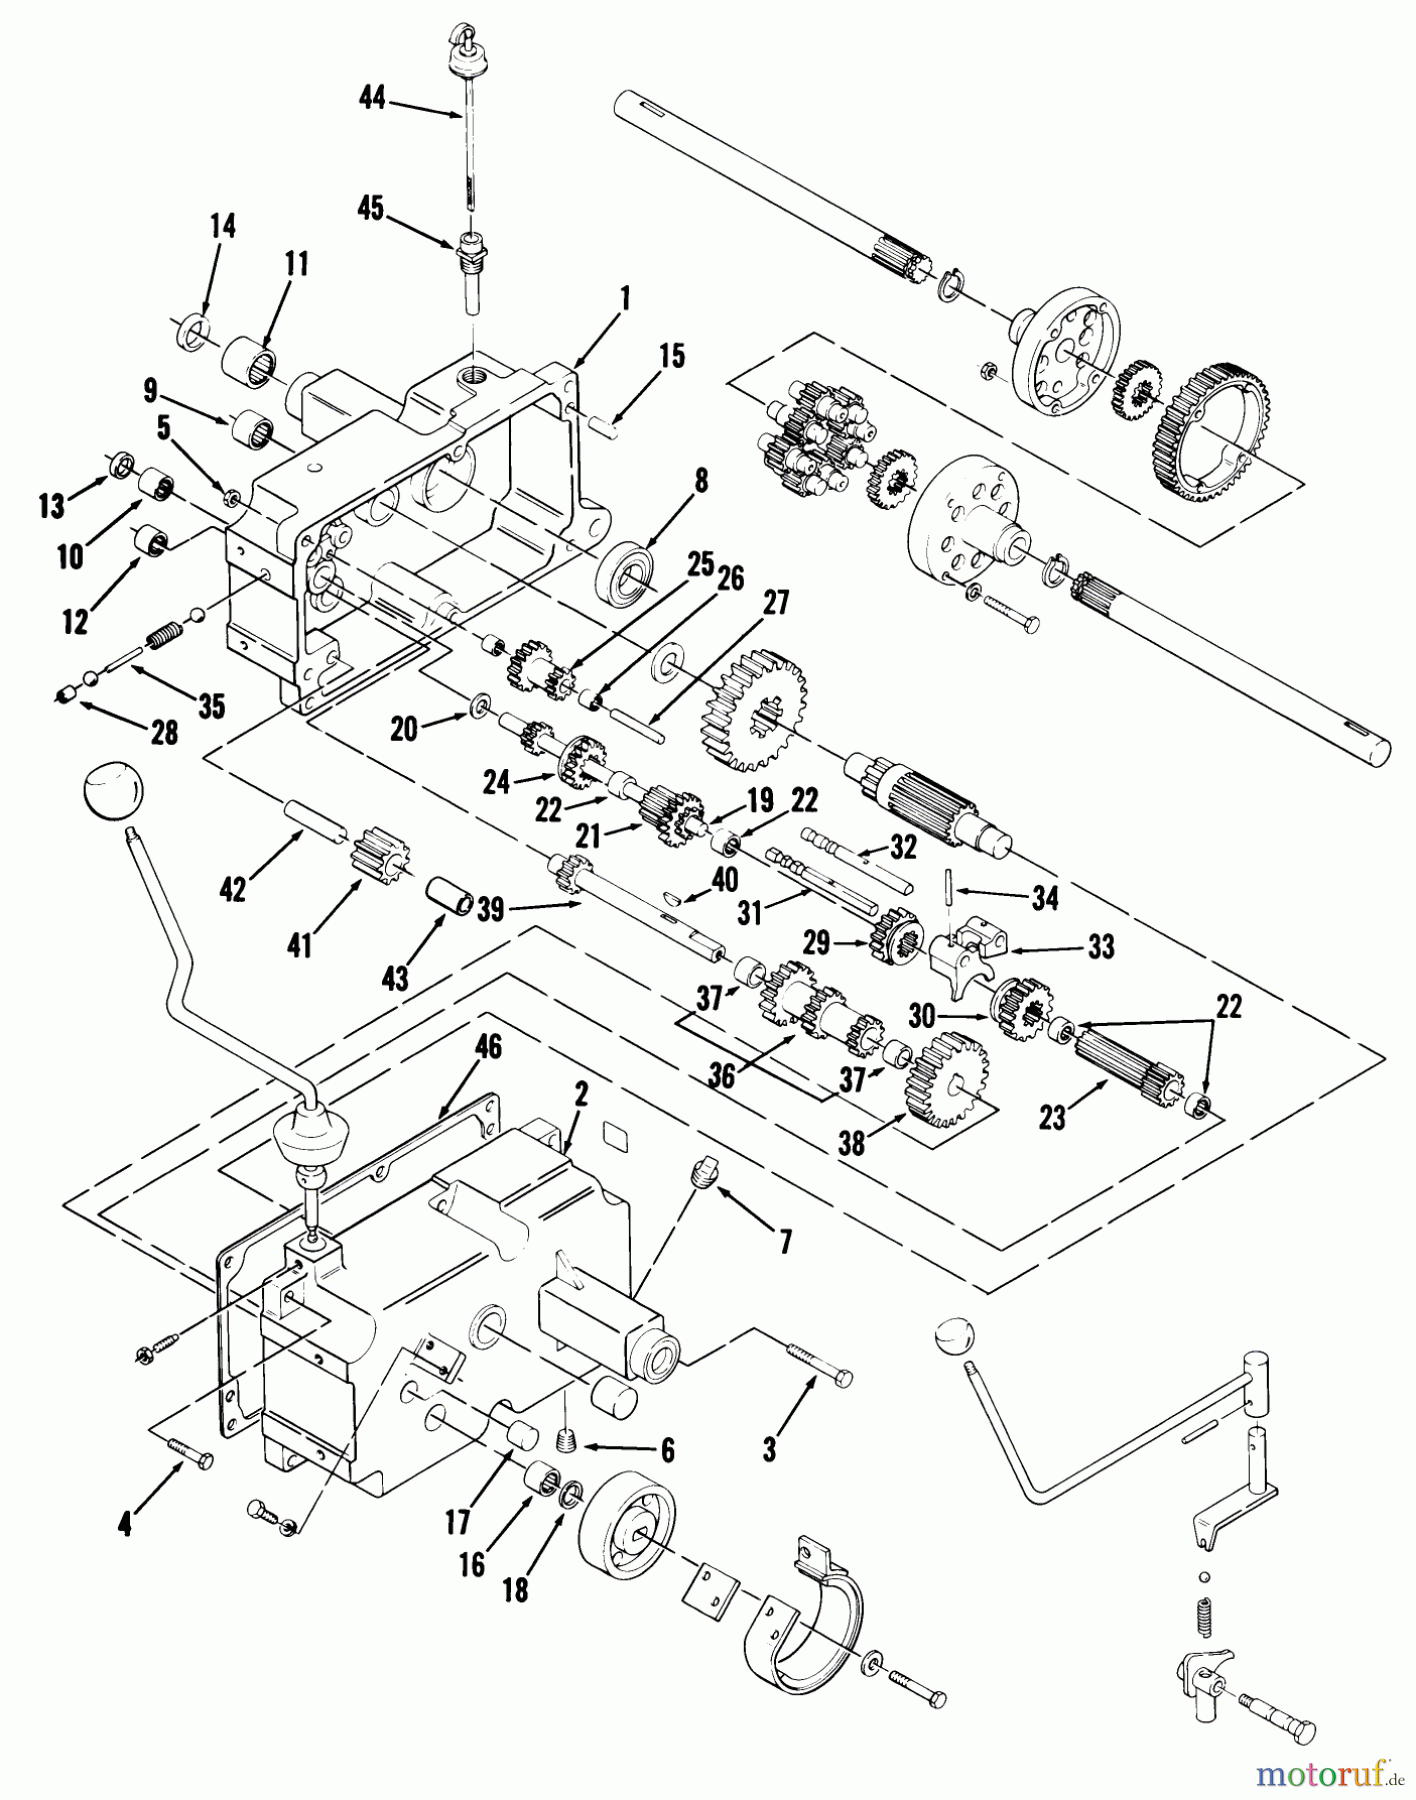  Toro Neu Mowers, Lawn & Garden Tractor Seite 1 01-16KE02 (C-165) - Toro C-165 Automatic Tractor, 1981 MECHANICAL TRANSMISSION-8 SPEED #1